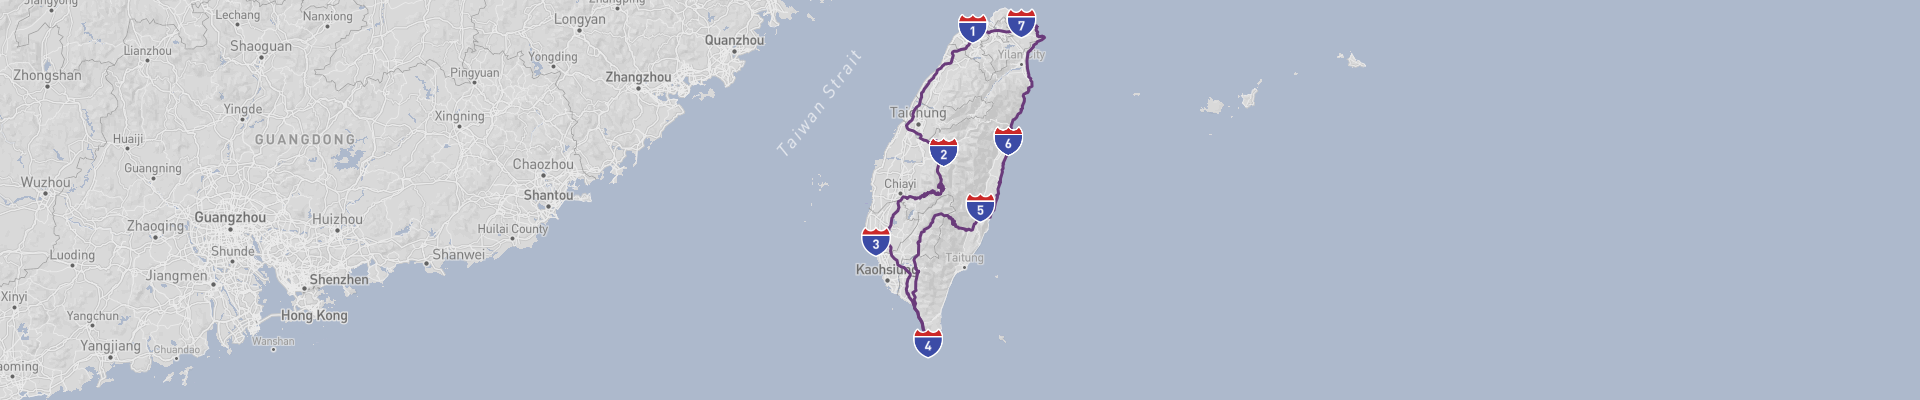 Taiwan Roadtrip